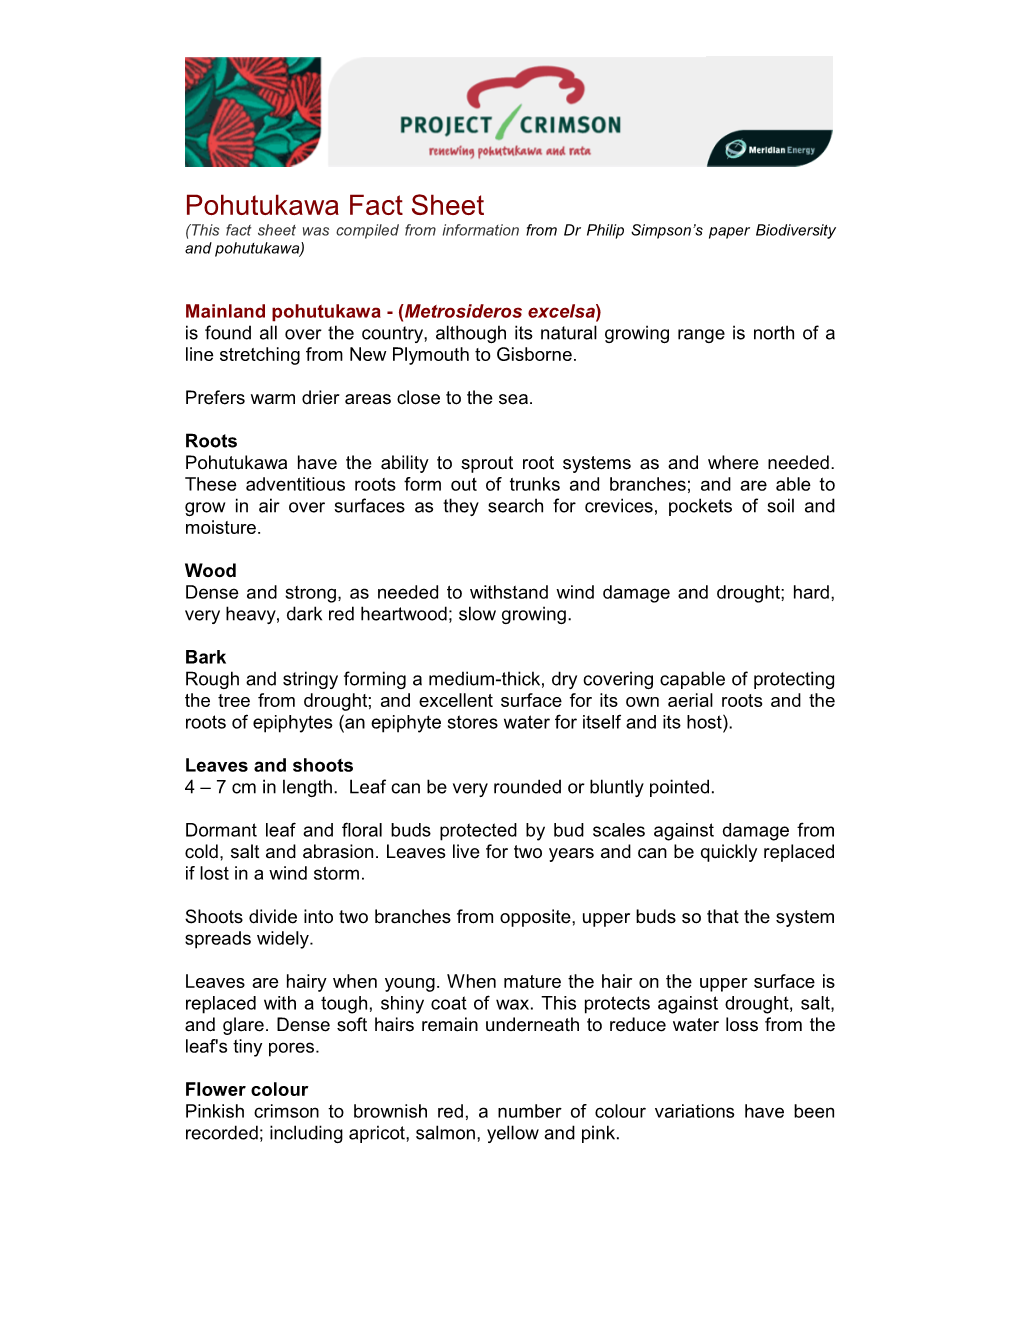 Pohutukawa Tree Fact Sheet